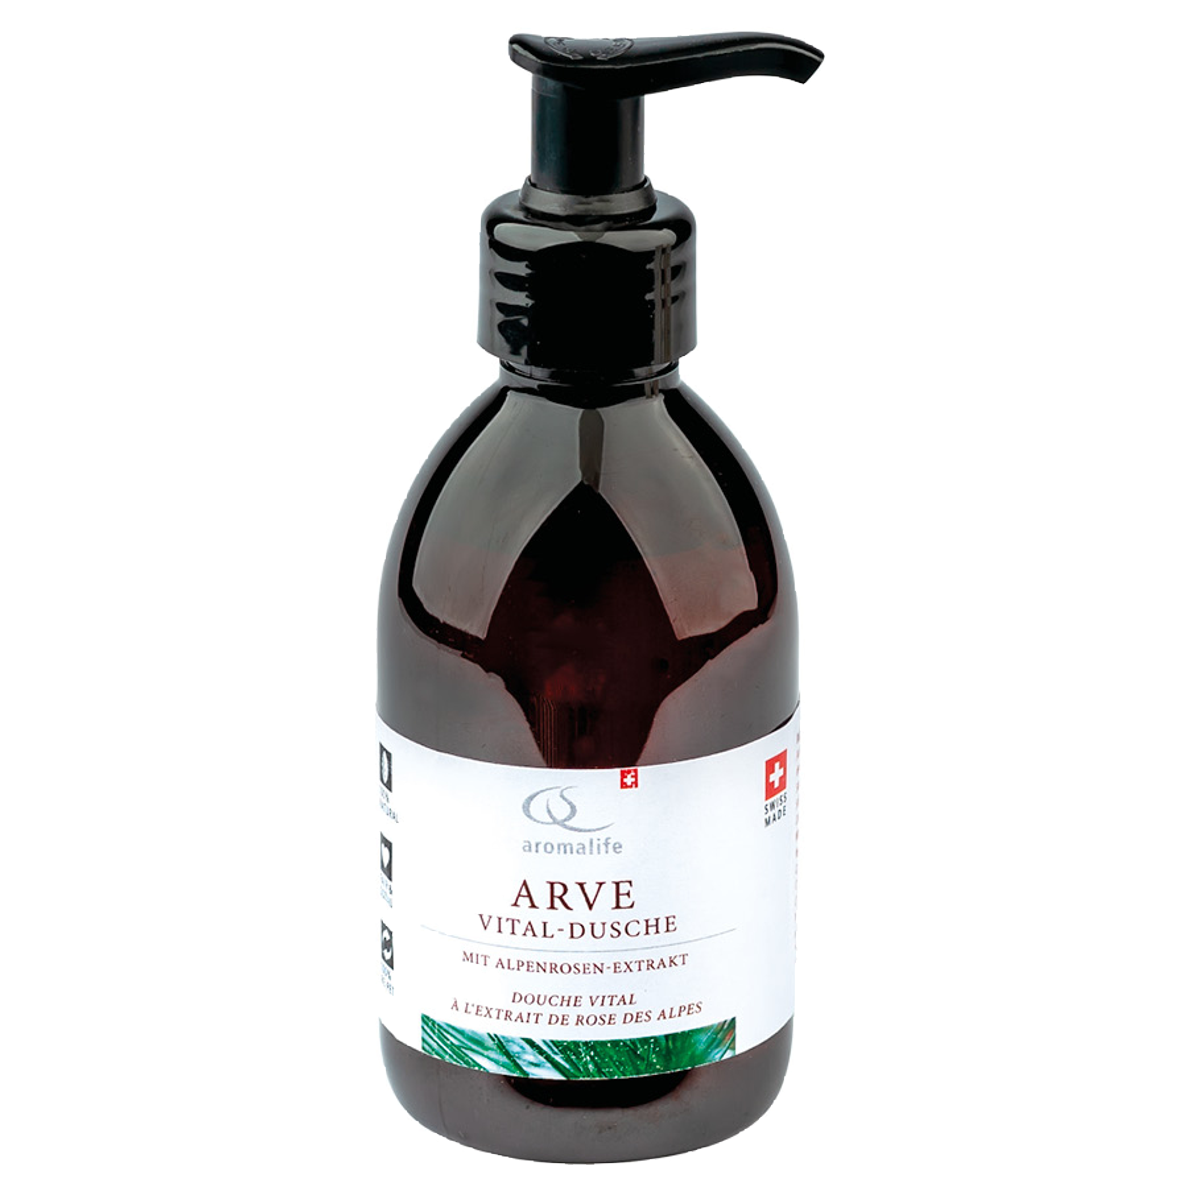 Aromalife Arve Vital-Dusche Alpenrosen-Extrakt 250 ml